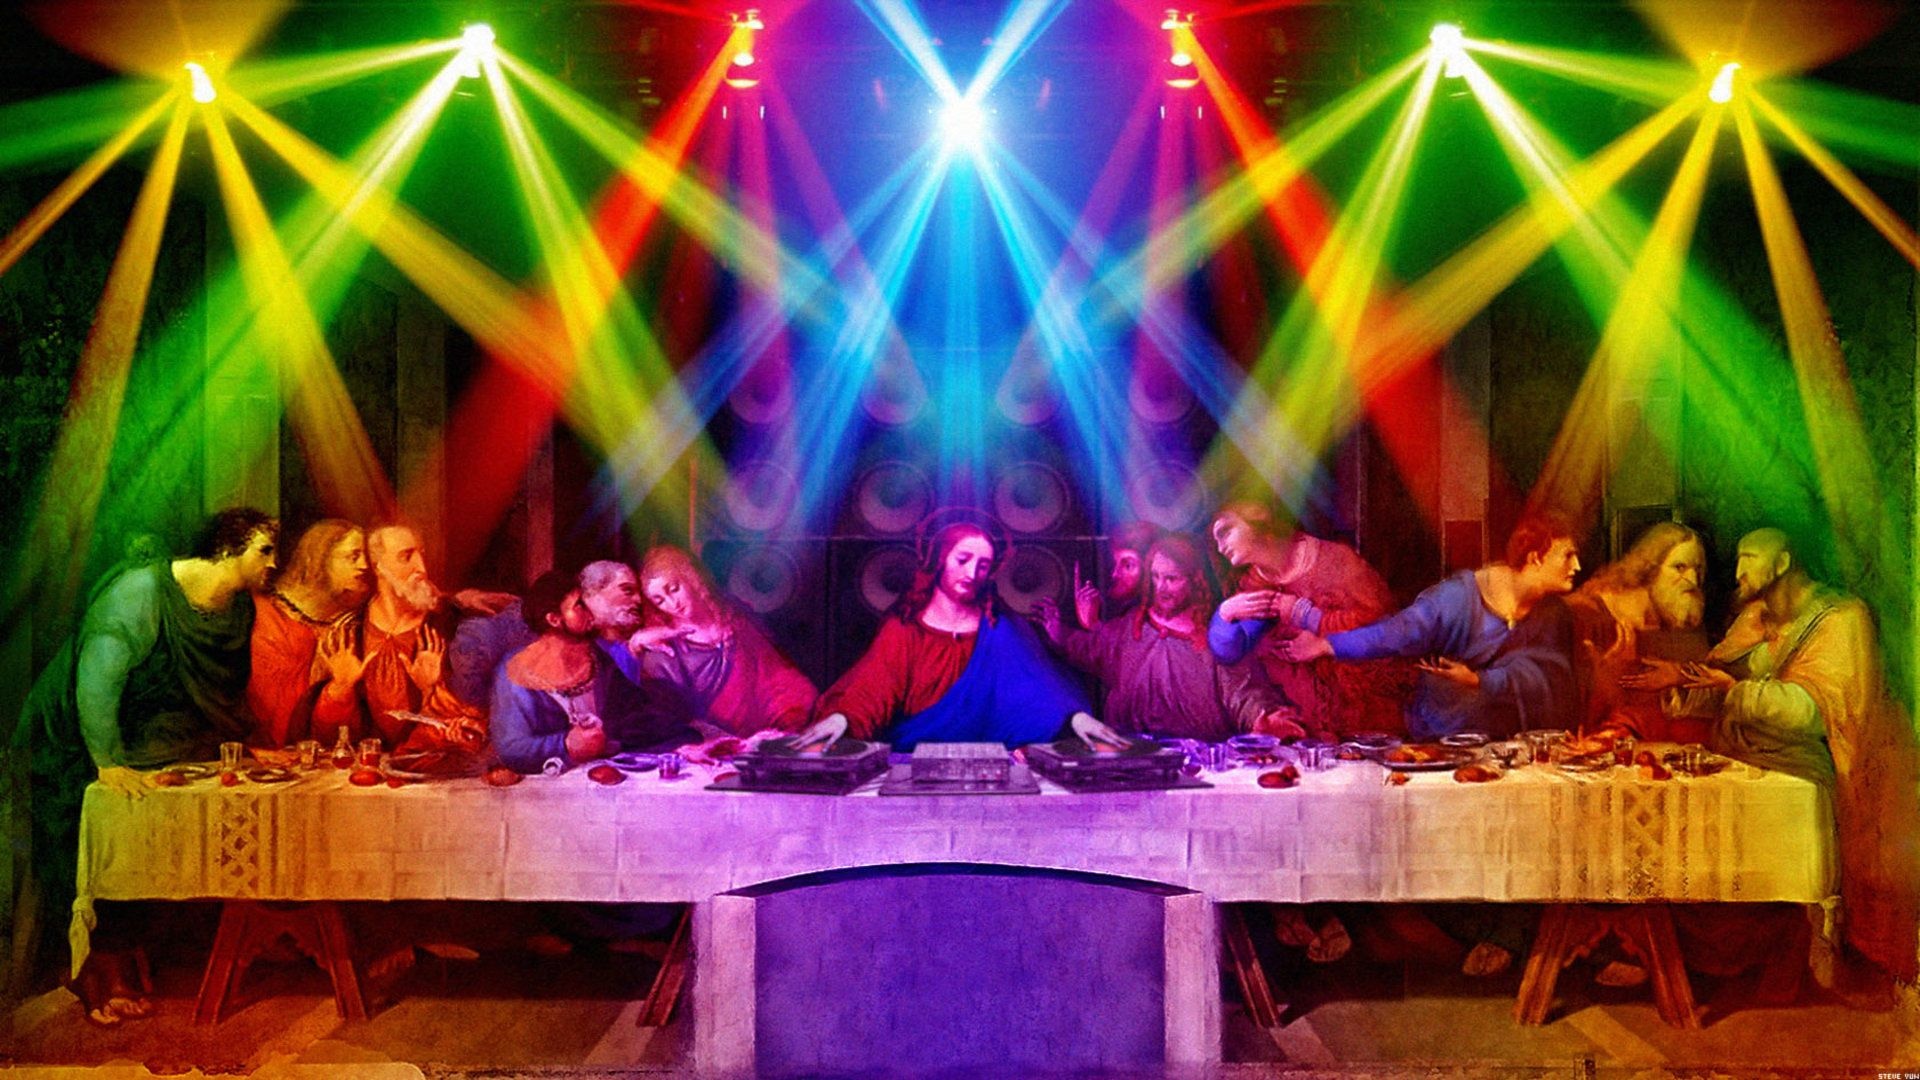 Colorful Funny Djs Last Rainbows Jesus Christ Scenes Sacreligious